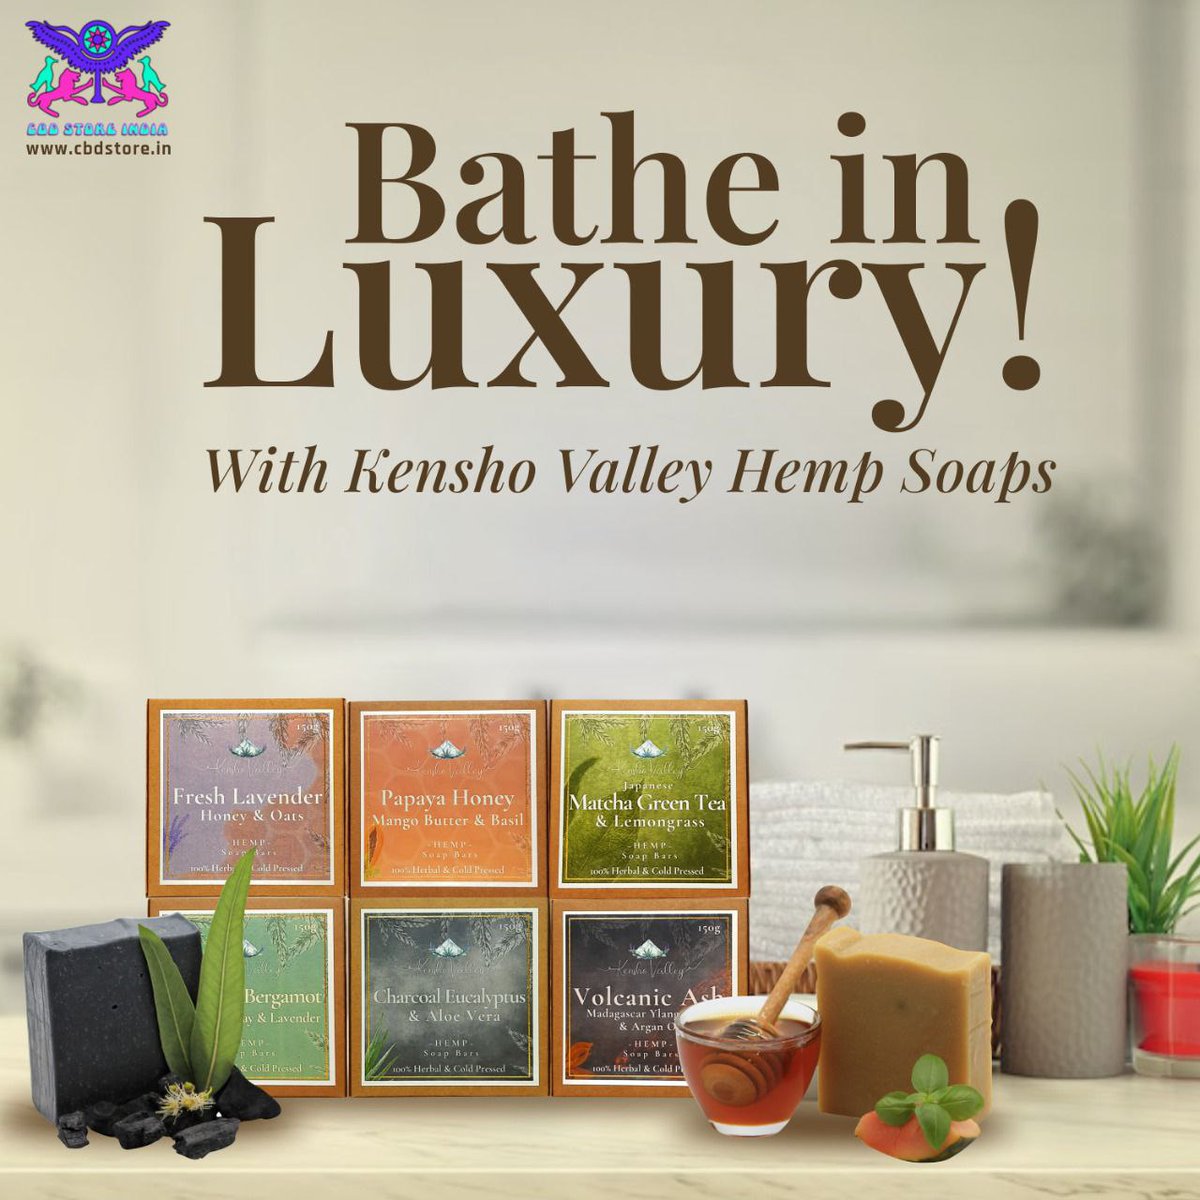 Kensho Valley’s Ultra-Luxurious & Premium range of Hand-Crafted Hemp Soaps
Explore the range & purchase here:
linkpop.com/csin

#cbdlove #cbd #cbdhealth #cbdheals #hempproducts #hempoil #hempskincare #stressed #cannabis #cannabidiol #health #cbdstore #cbdstoreindia